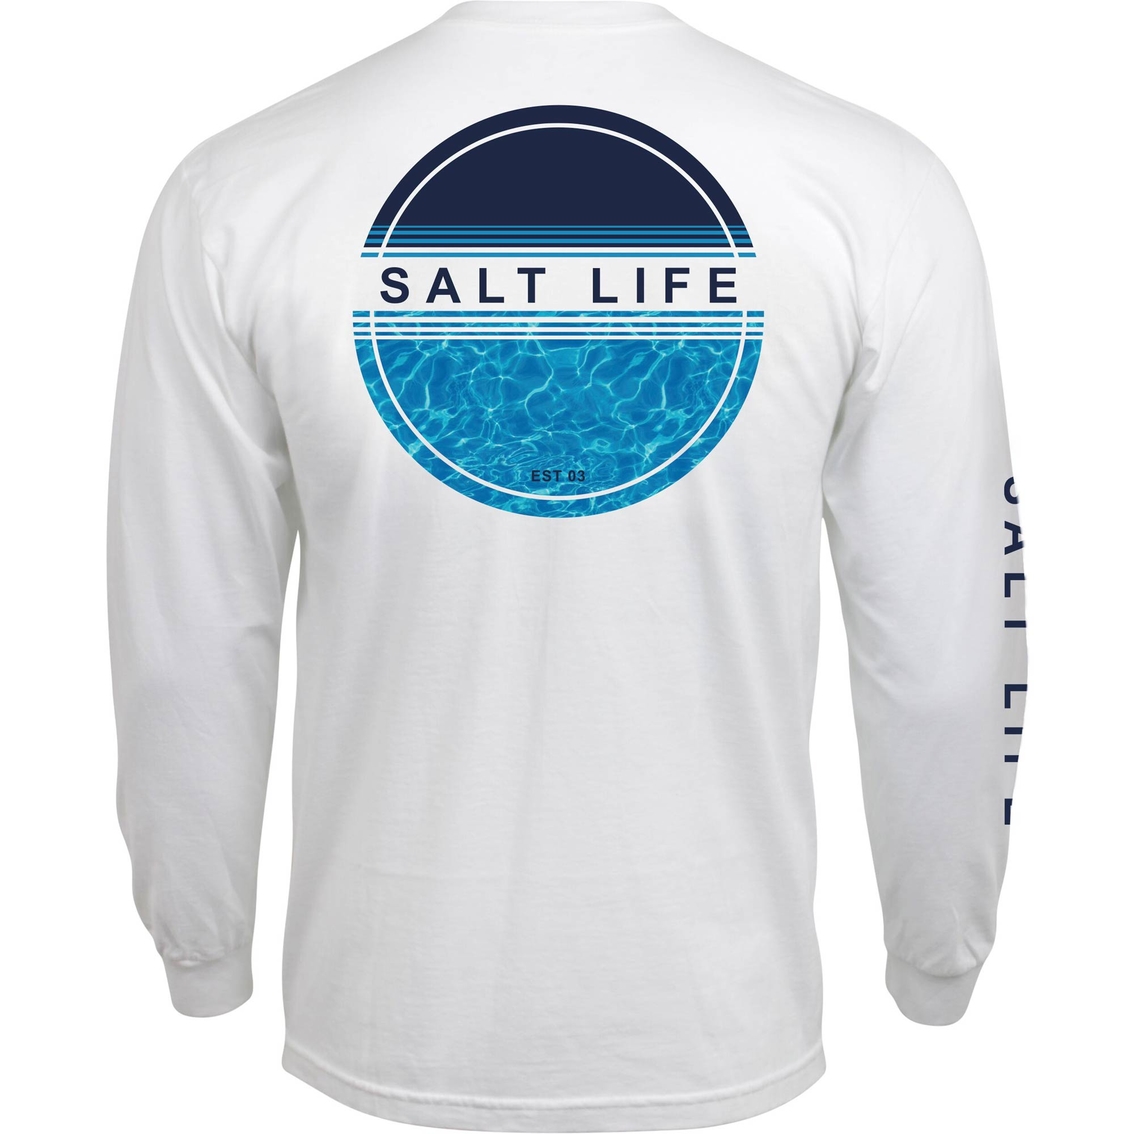 Salt Life Calm Waters Tee - Image 2 of 2